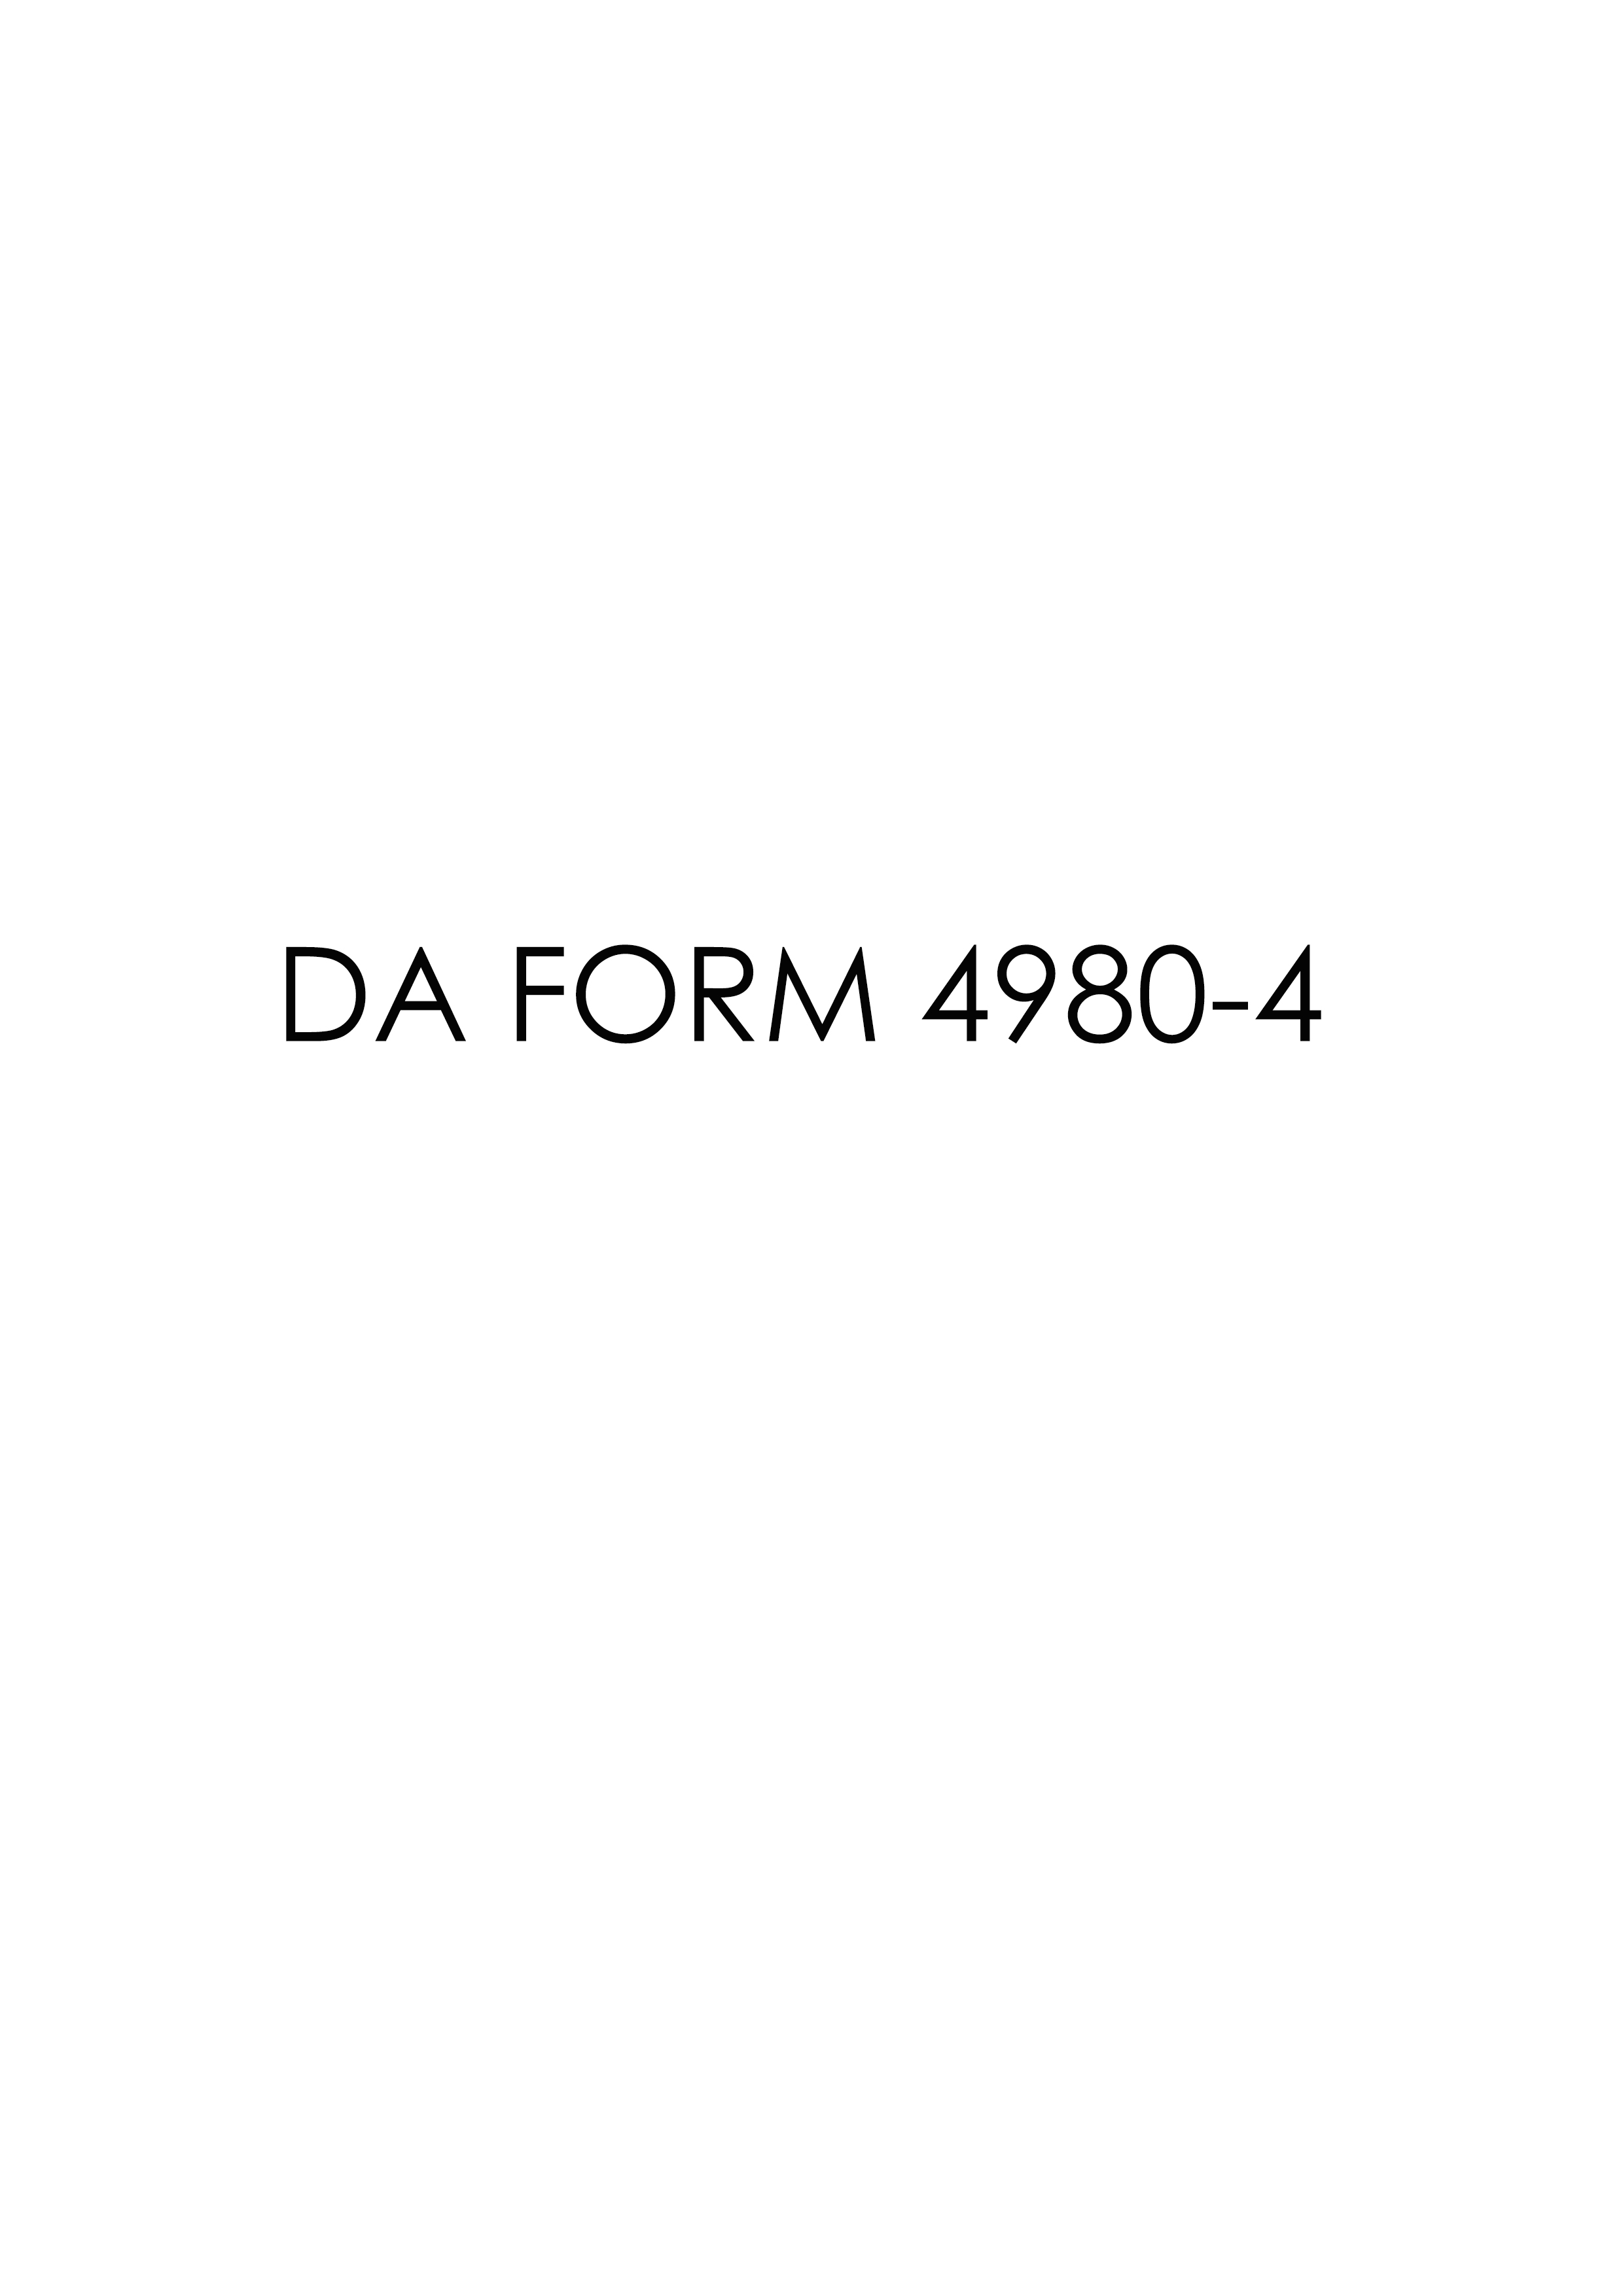 da Form 4980-4 fillable